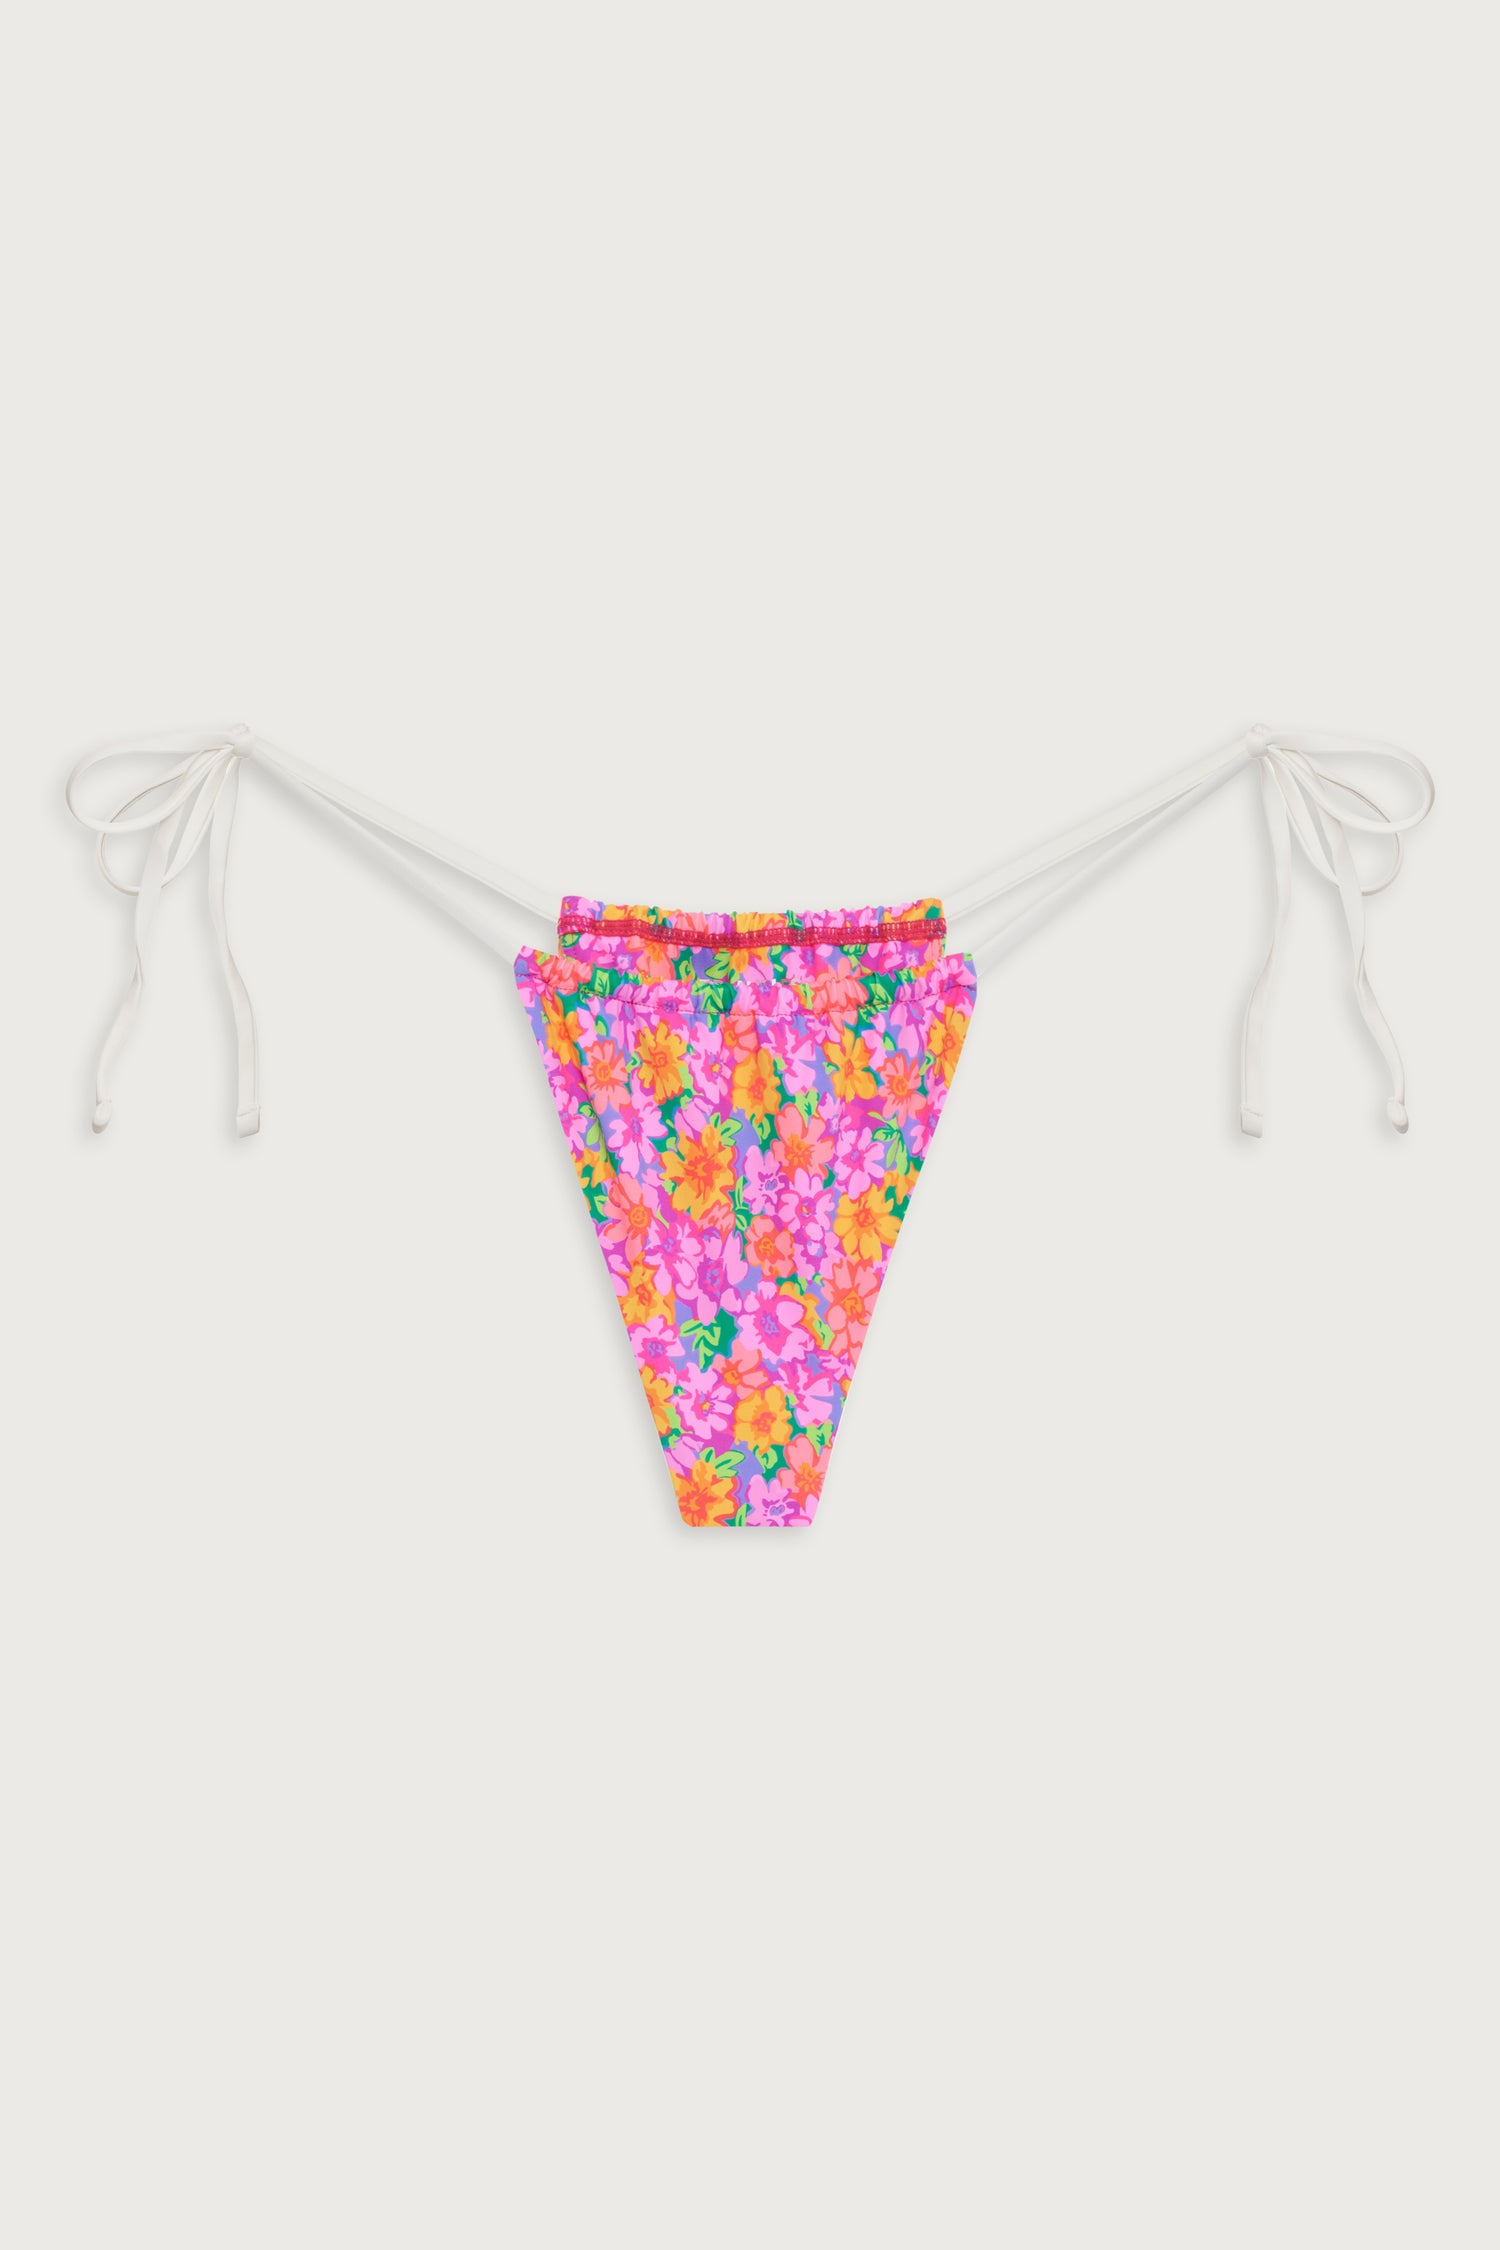 Tia Floral Skimpy Bikini Bottom - Daisy Pond